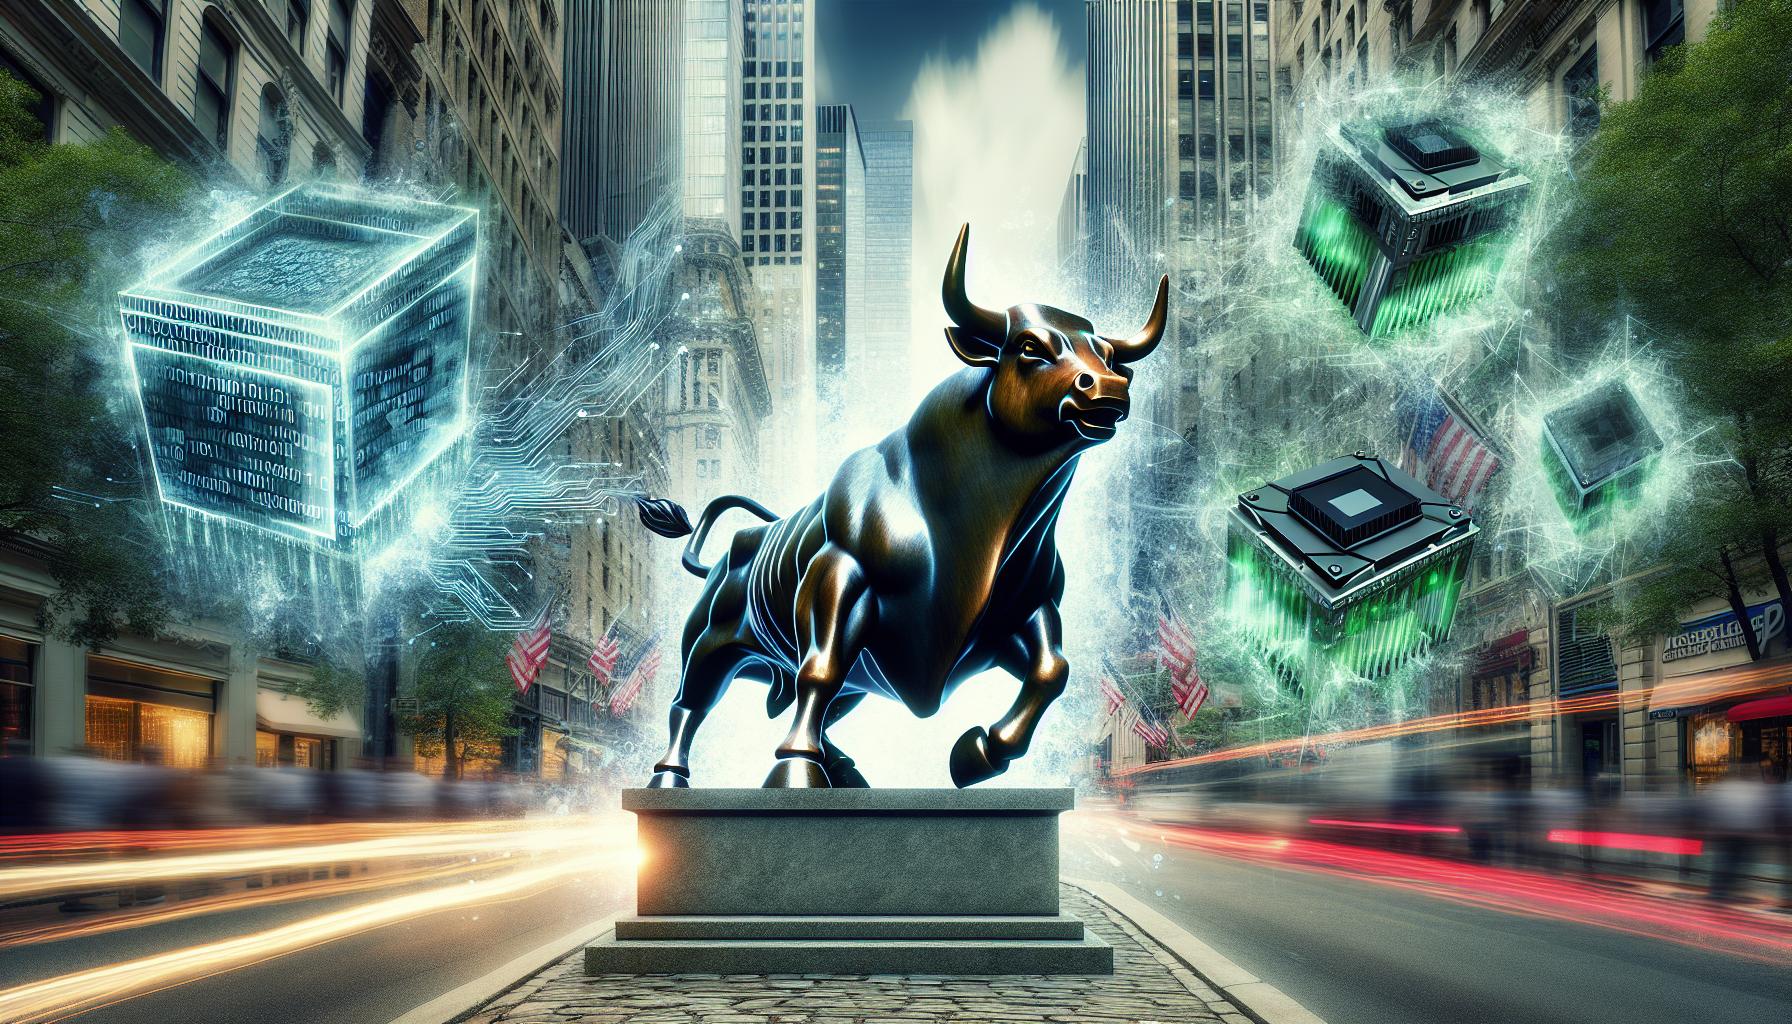 Wall Street's Focus on Nvidia's Strategic Growth | FinOracle